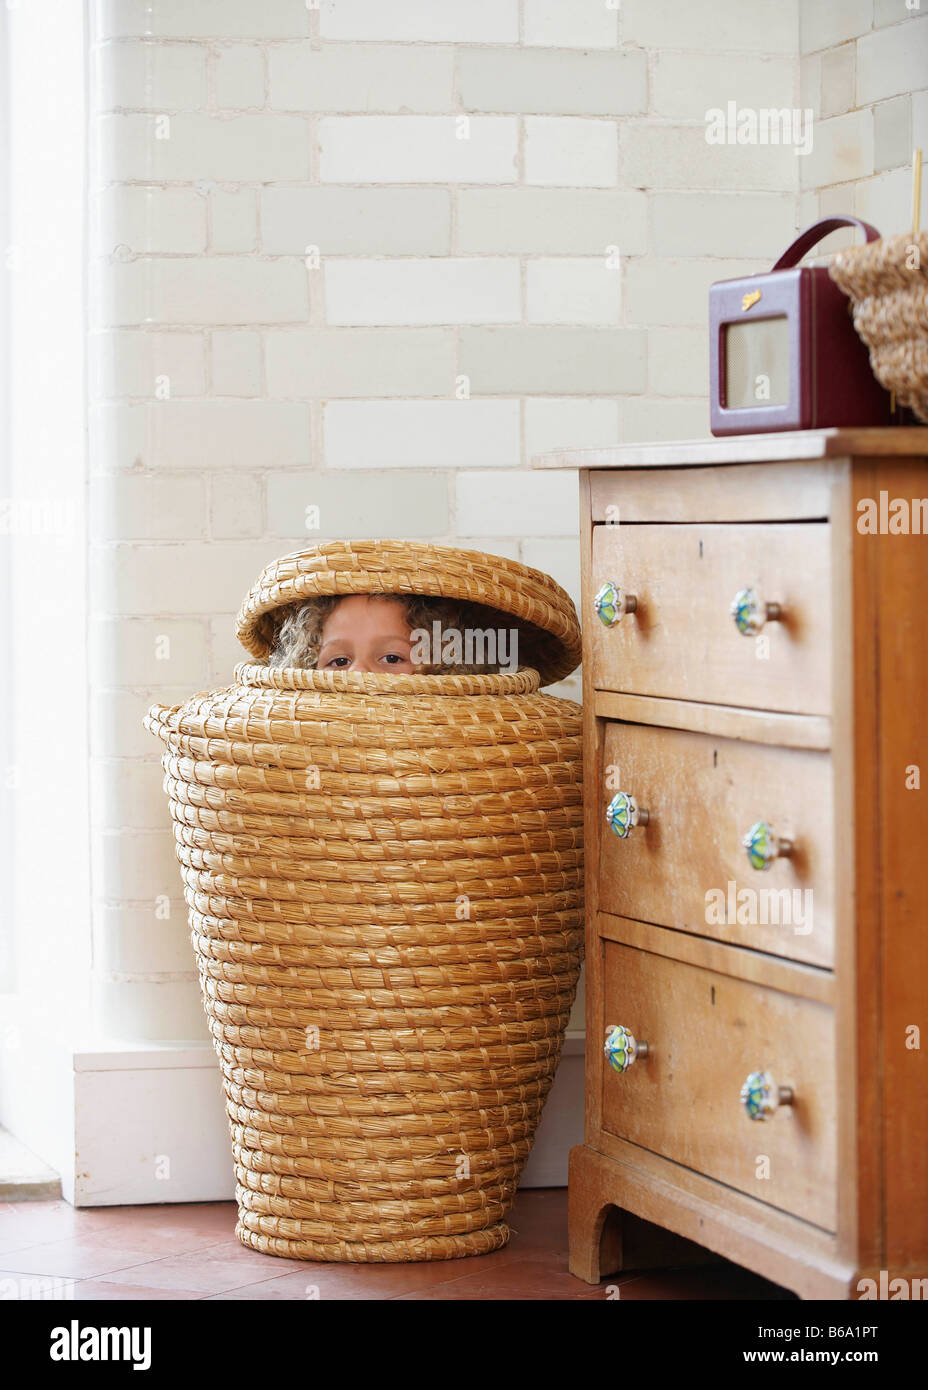 child-hiding-in-laundry-basket-B6A1PT.jpg